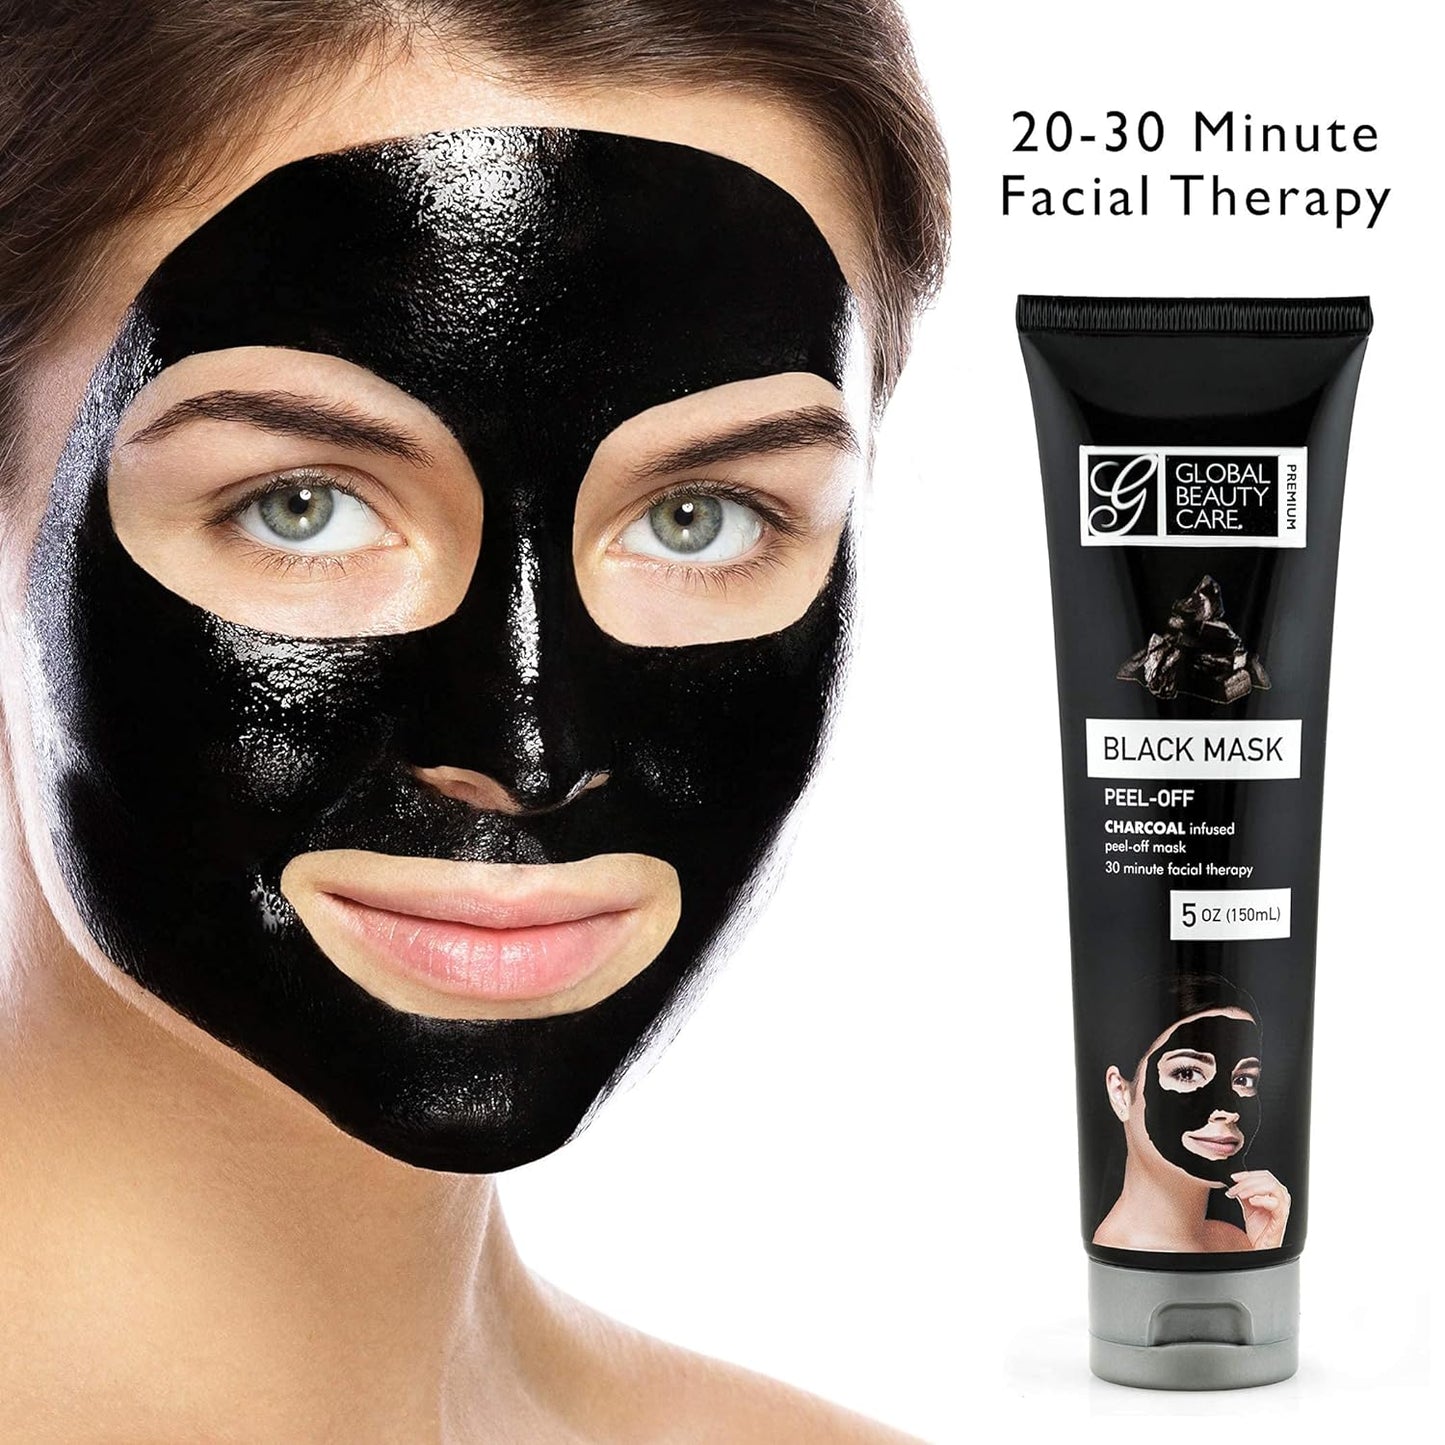 Black Mask: Charcoal Infused Peel-Off Mask